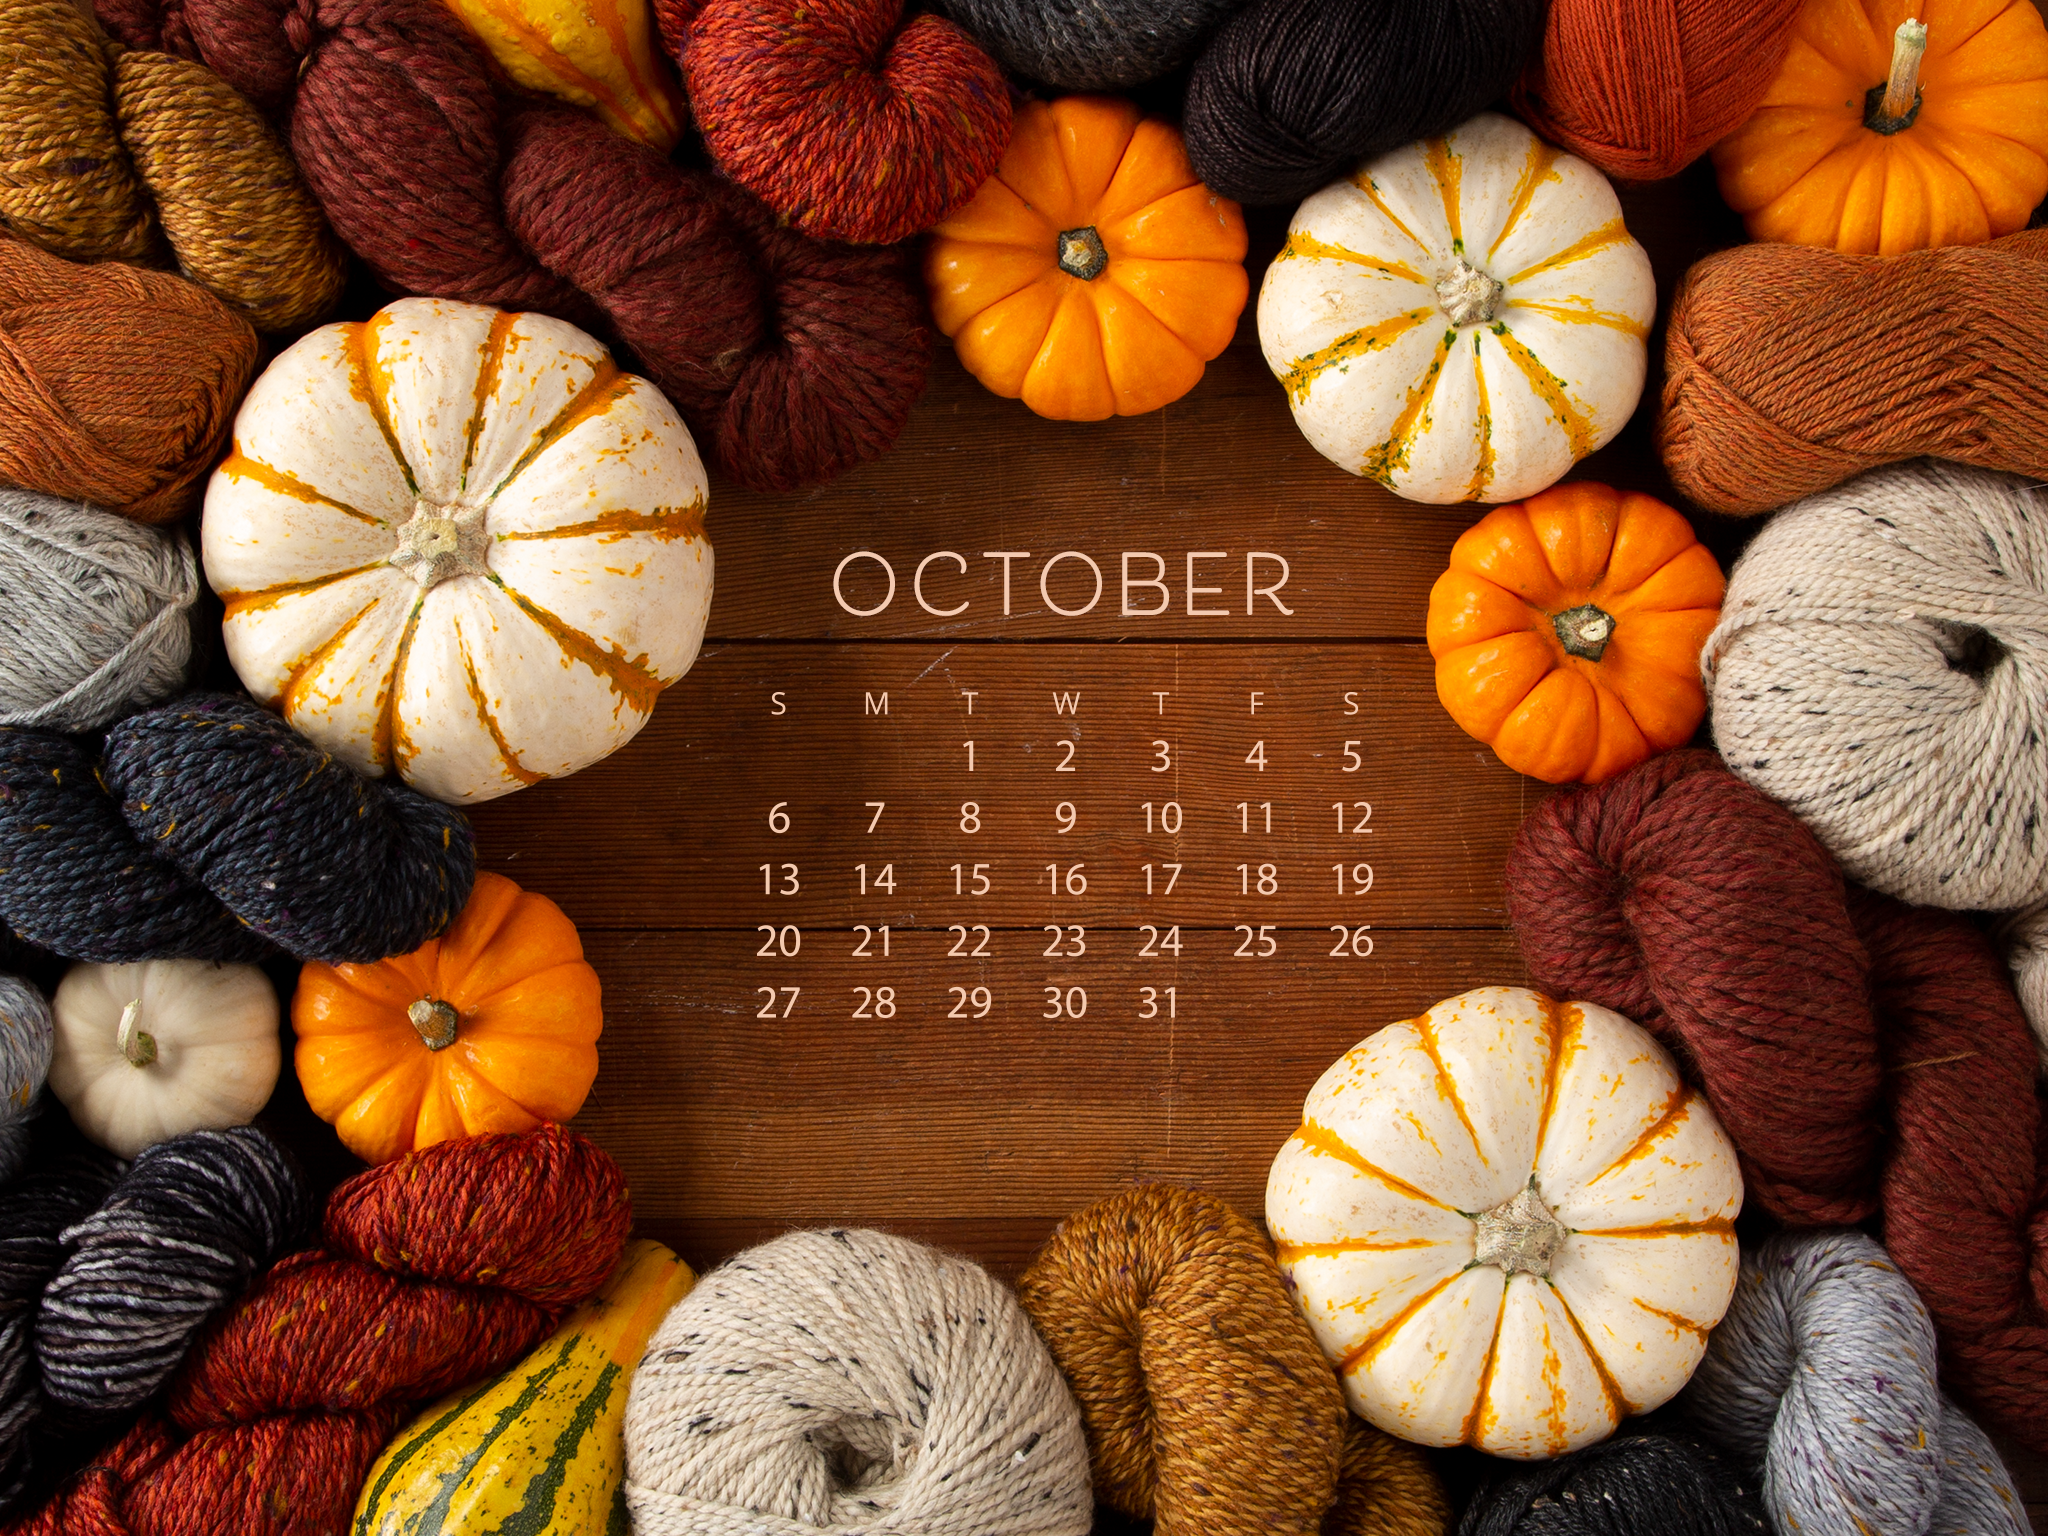 Free Downloadable October Calendar - The Knit Picks Staff Knitting Blog